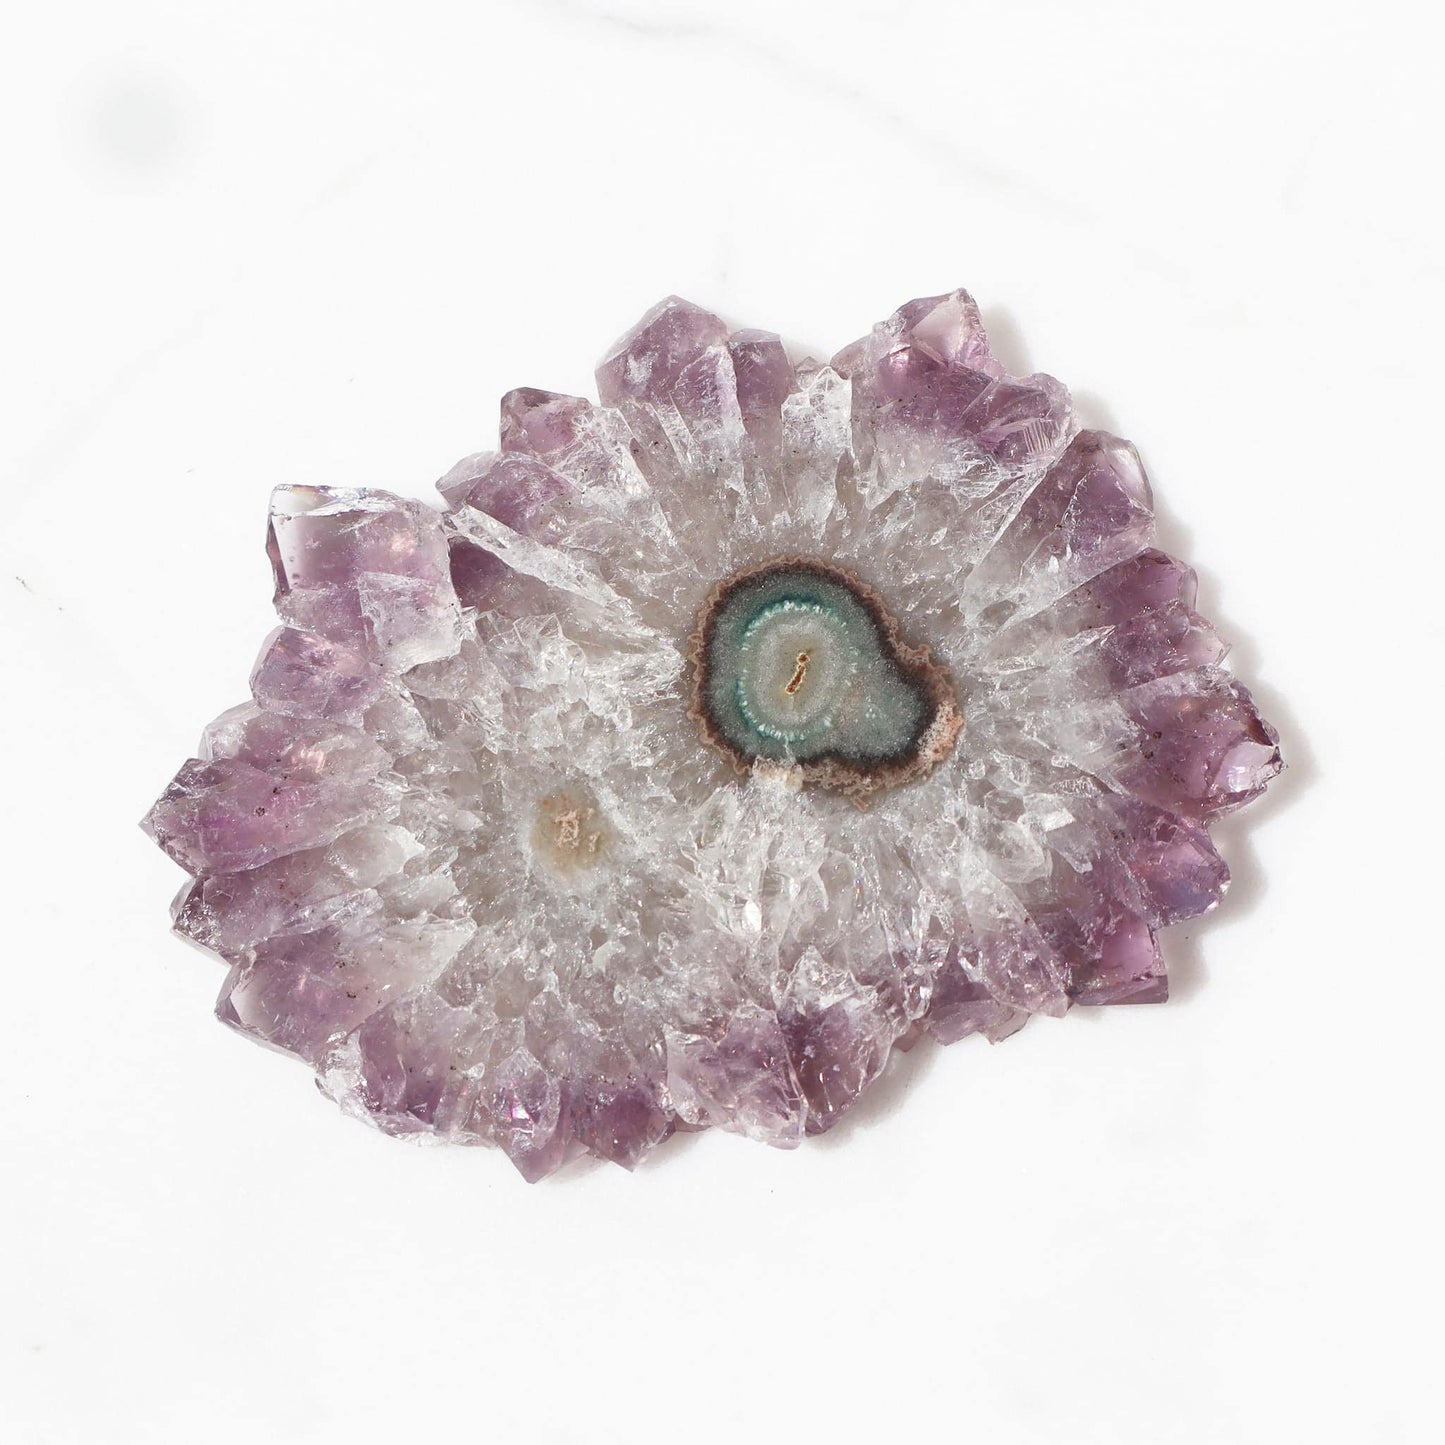 Amethyst Stalactite Slice Crystals Flower